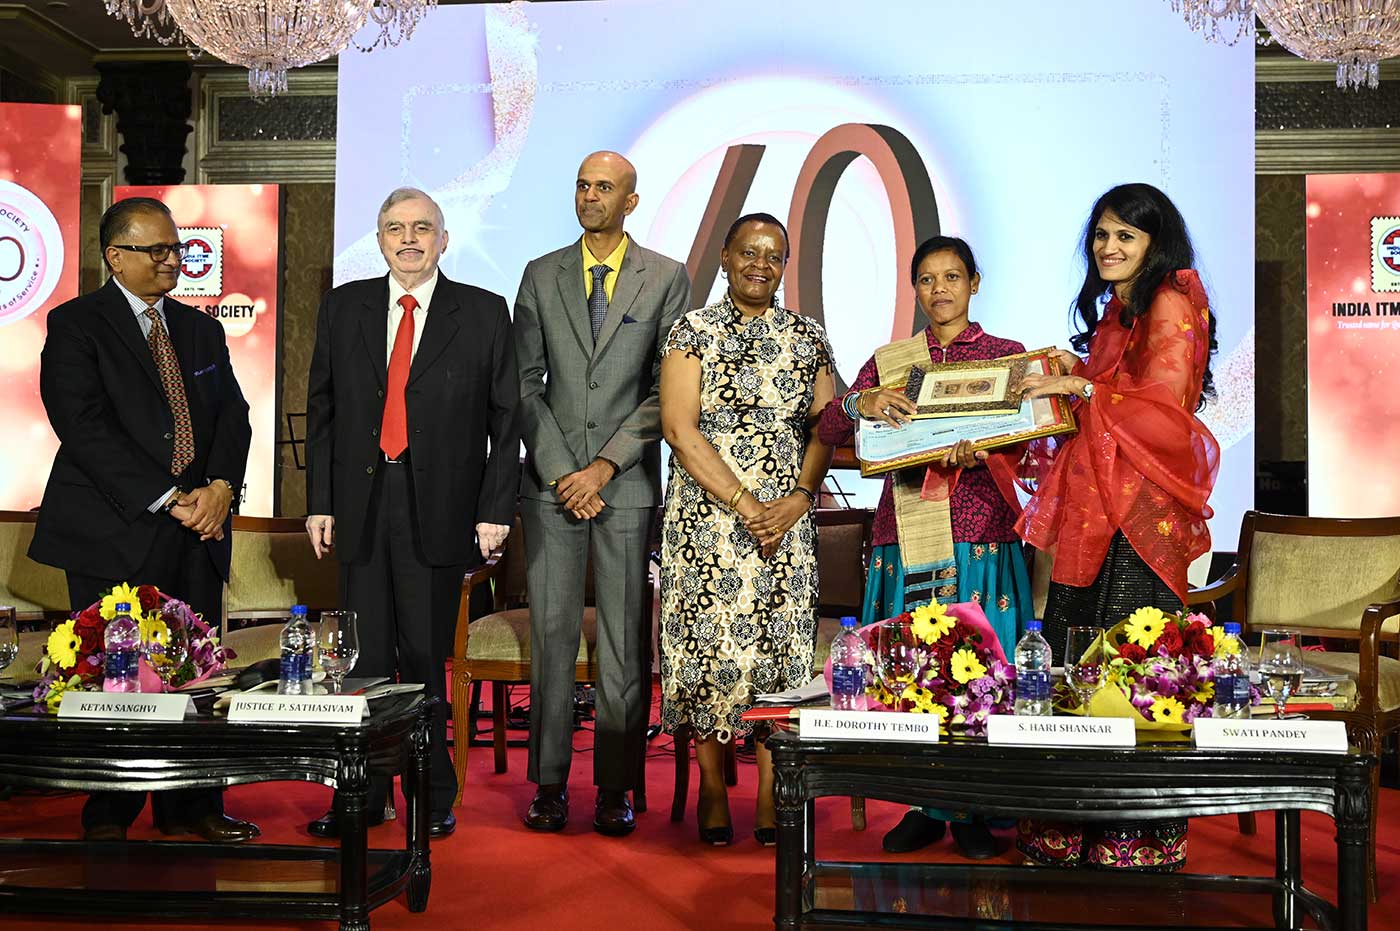 Women Empowerment through Entrepreneurship – Ms. Kuni Dehuri, Bhubaneswar, Odisha received the award